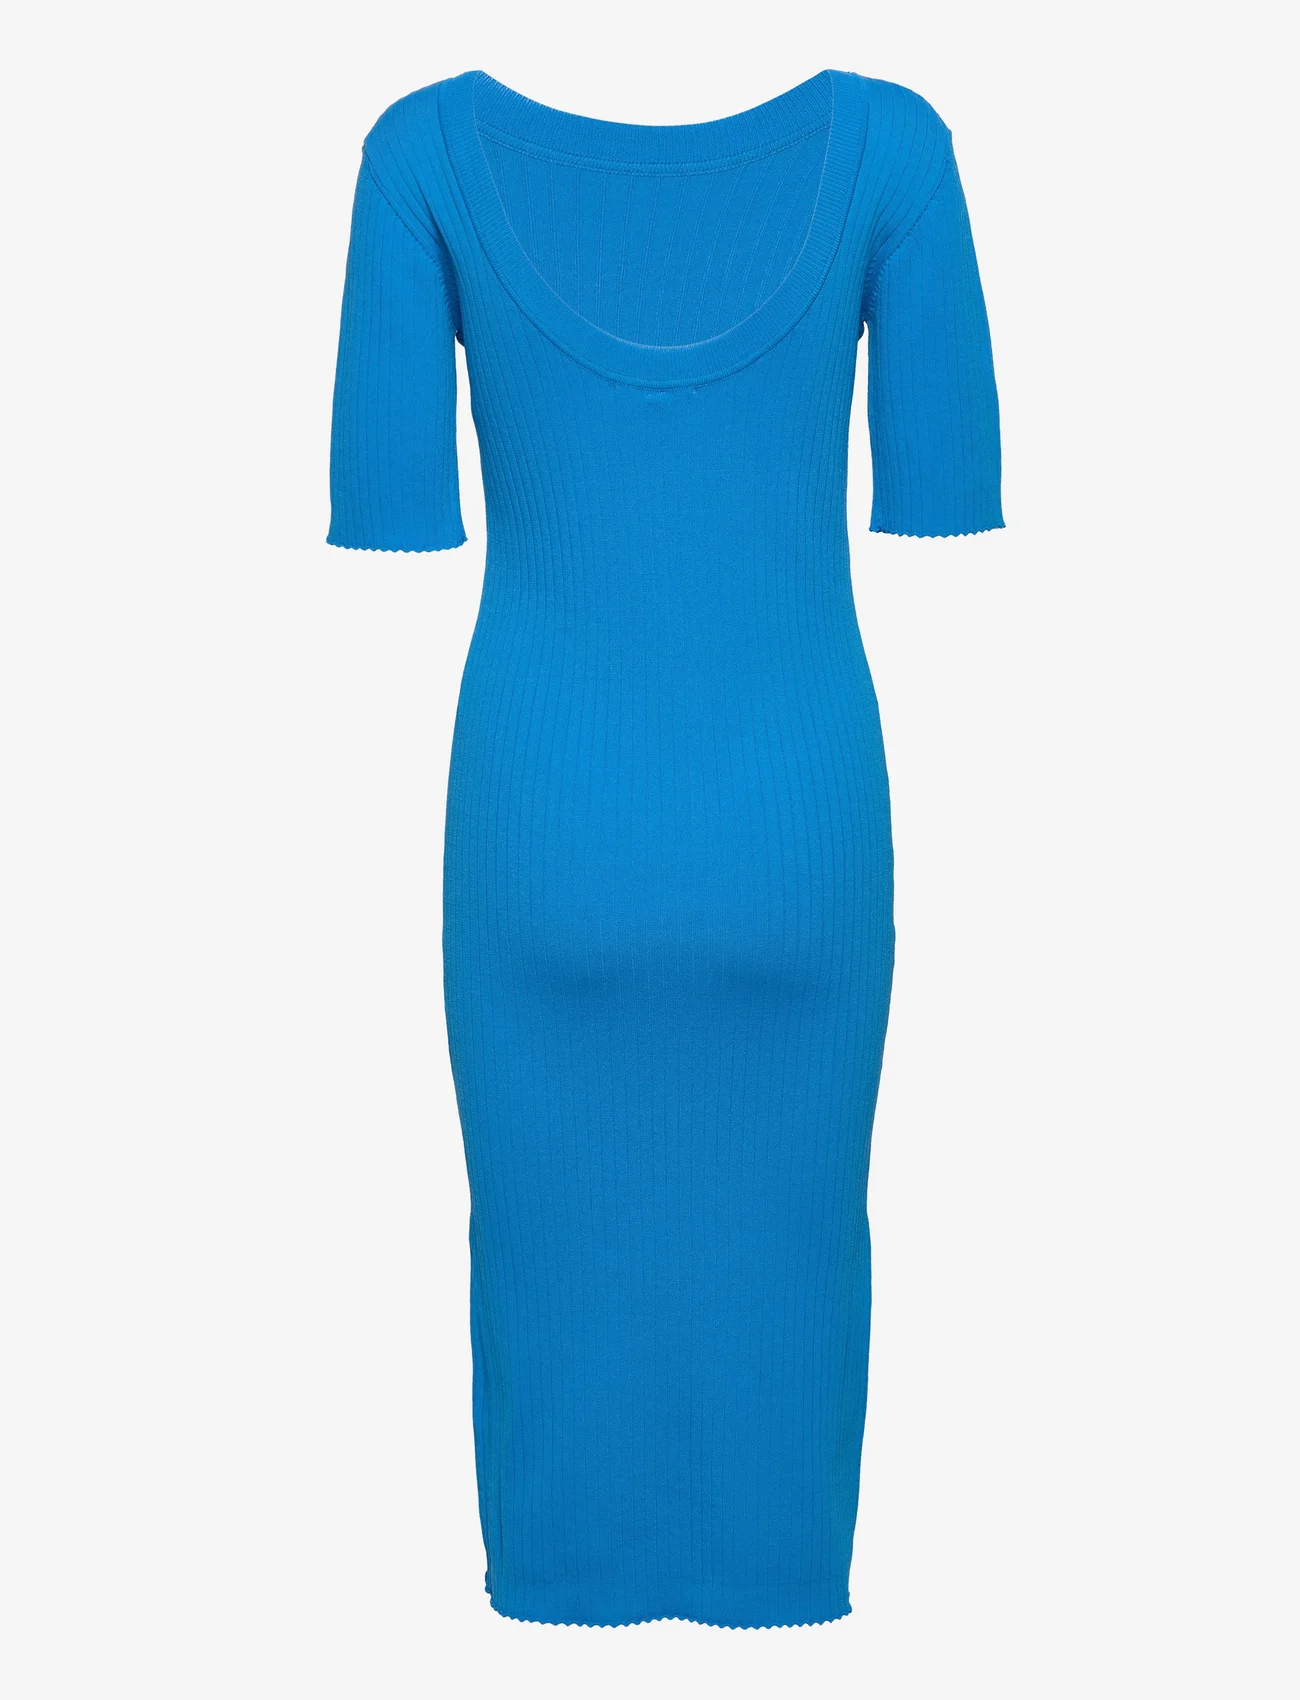 Just Female - Fresh dress - etuikleider - malibu blue - 1